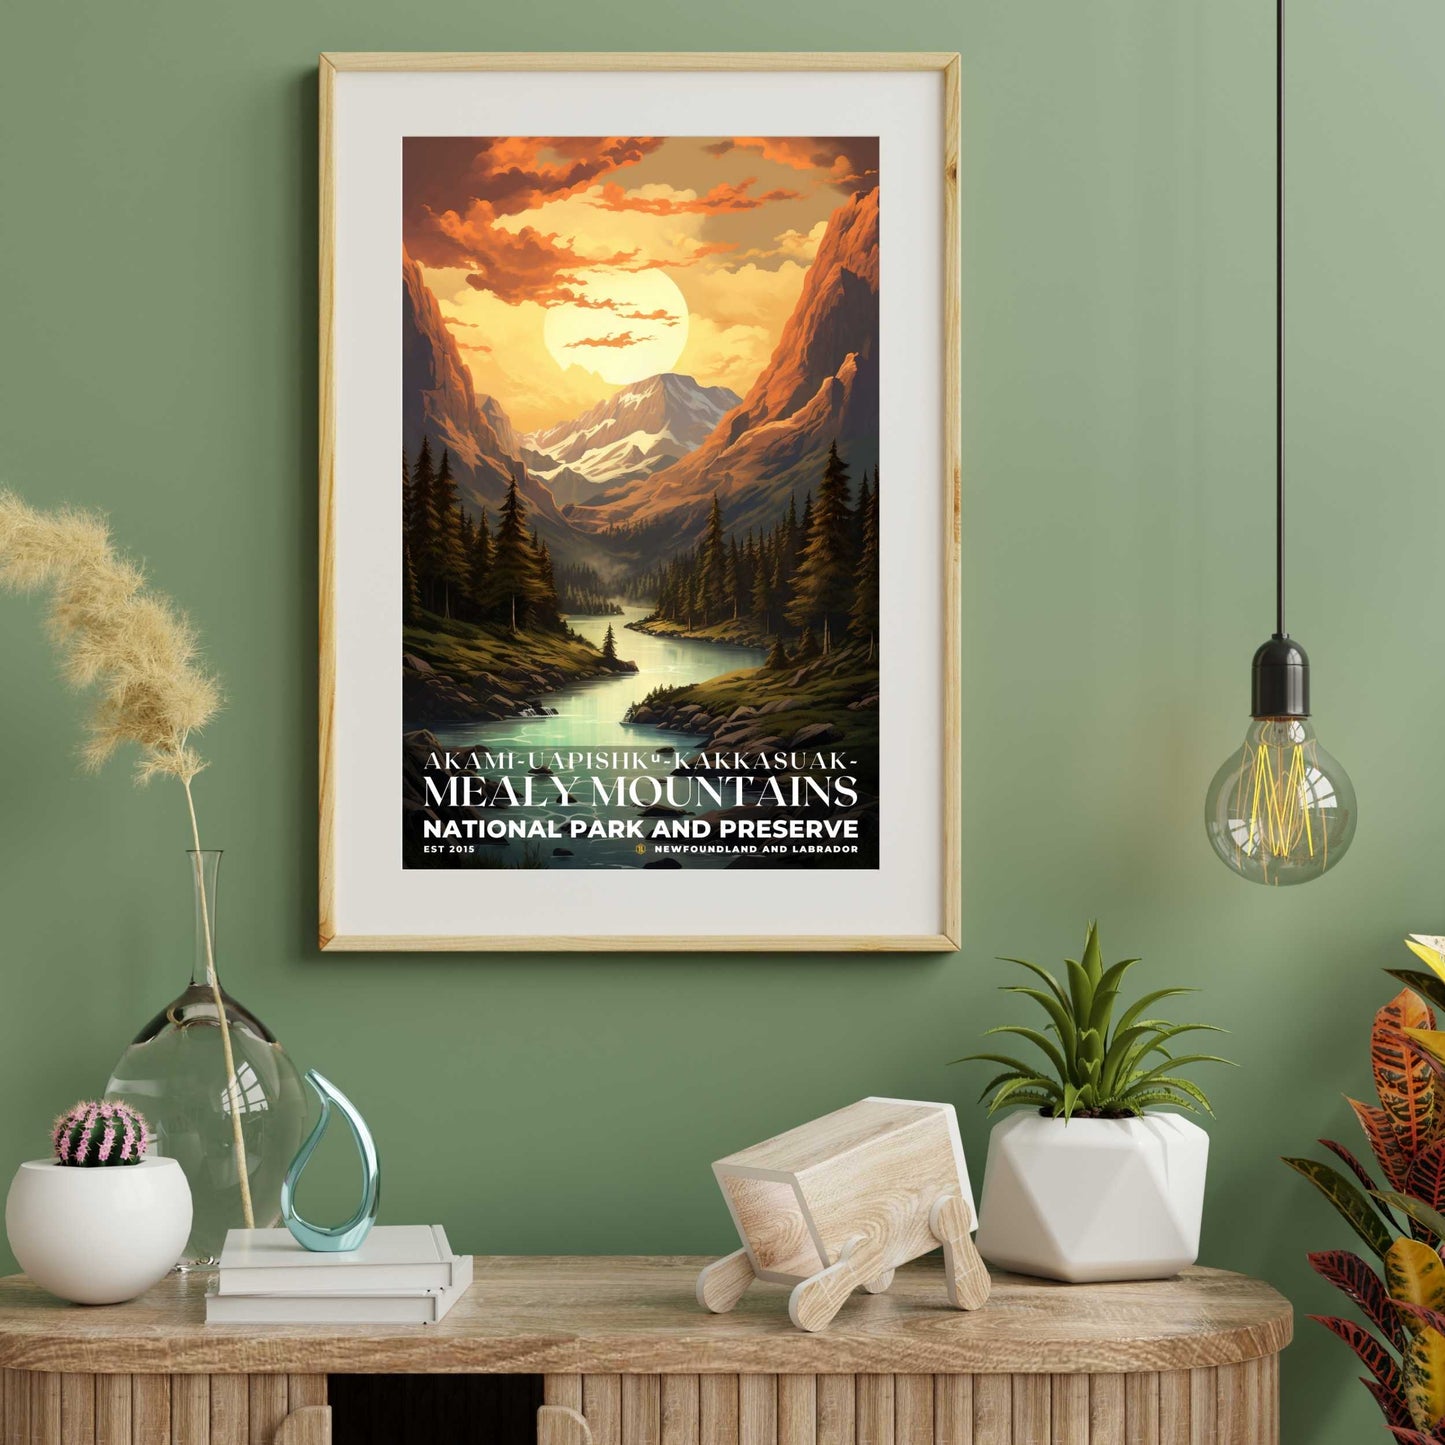 Akami-Uapishk-KakKasuak-Mealy Mountains National Park Poster | S07